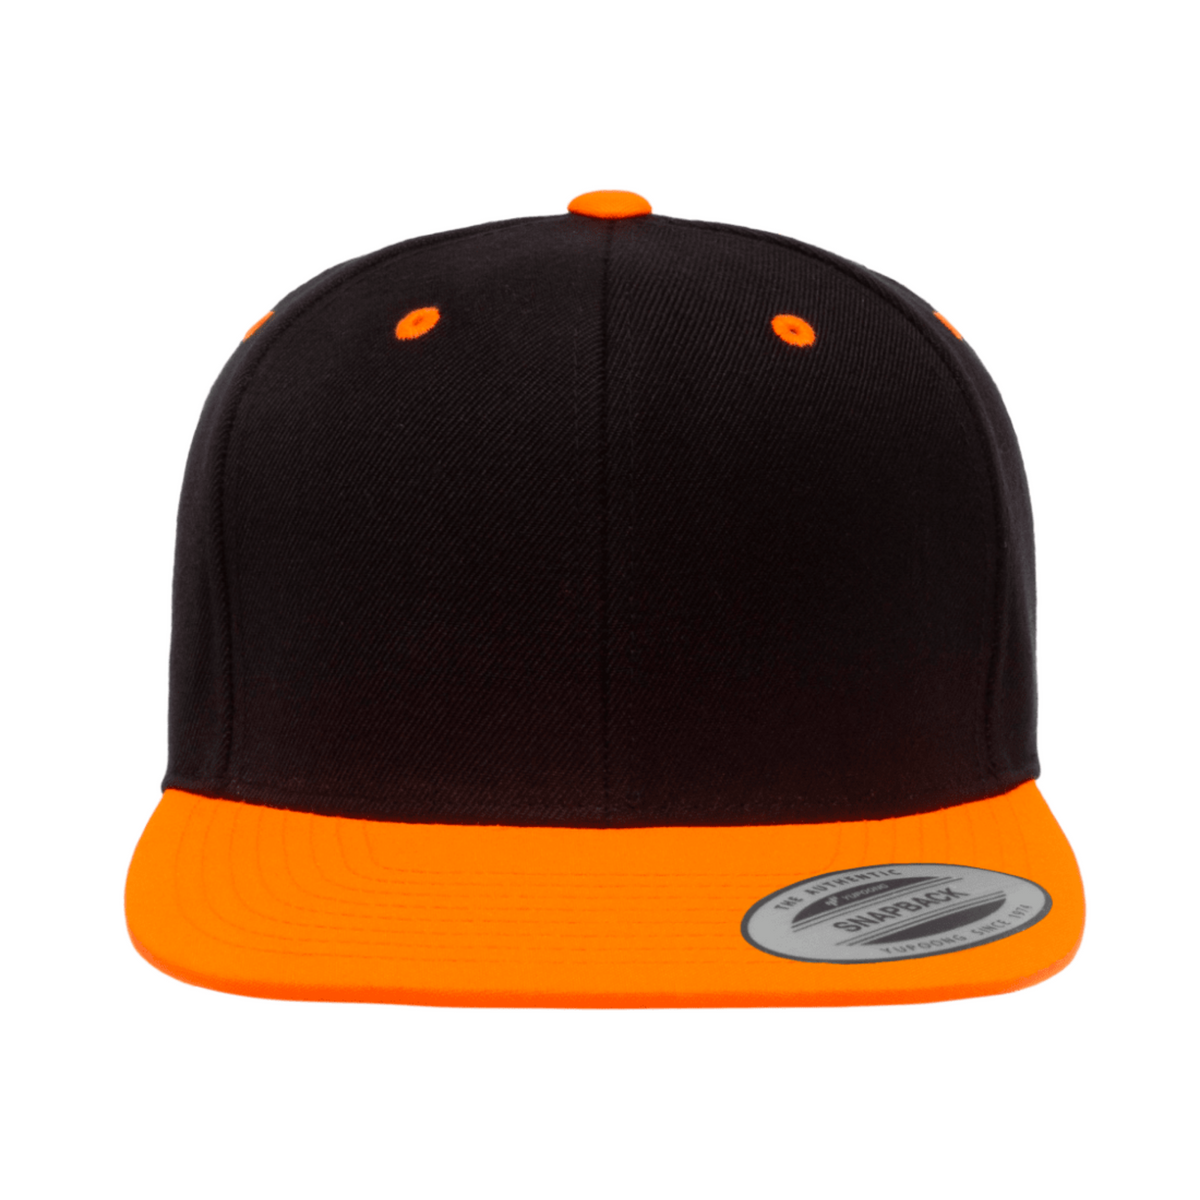 Snapback Yupoong Classic Orange Clothing Up with Flexfit Hat – Neon Lyte Black Brim